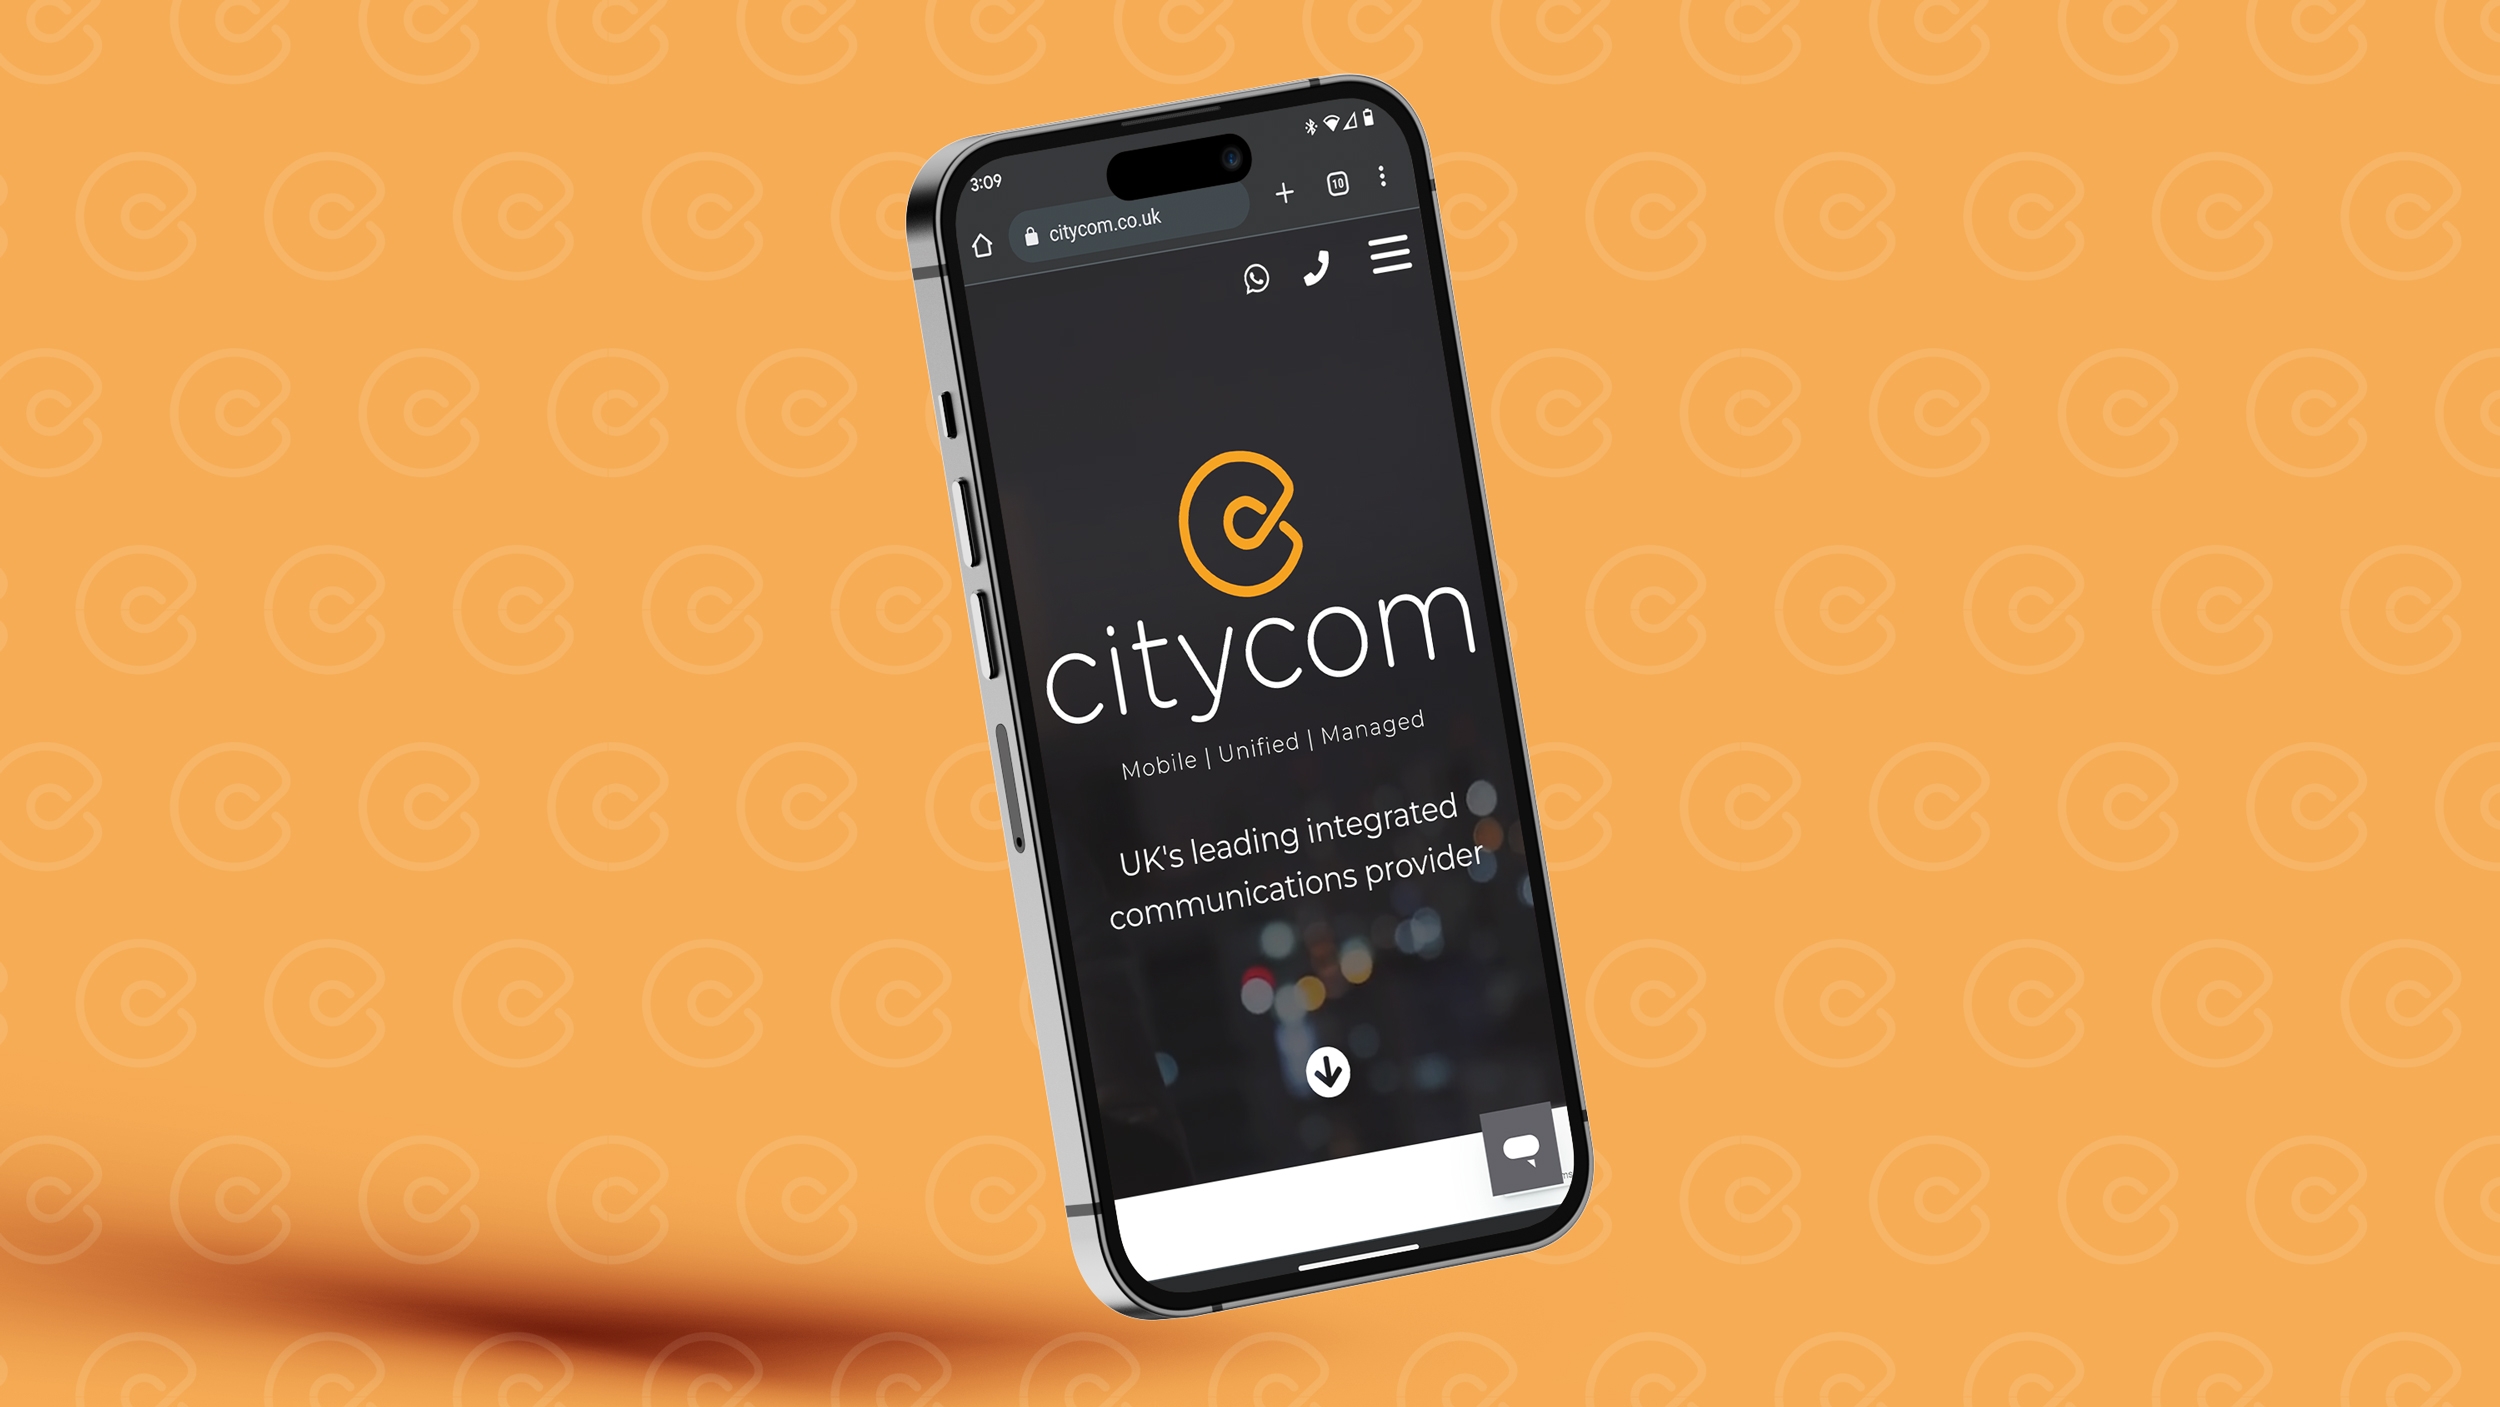 Citycom projects